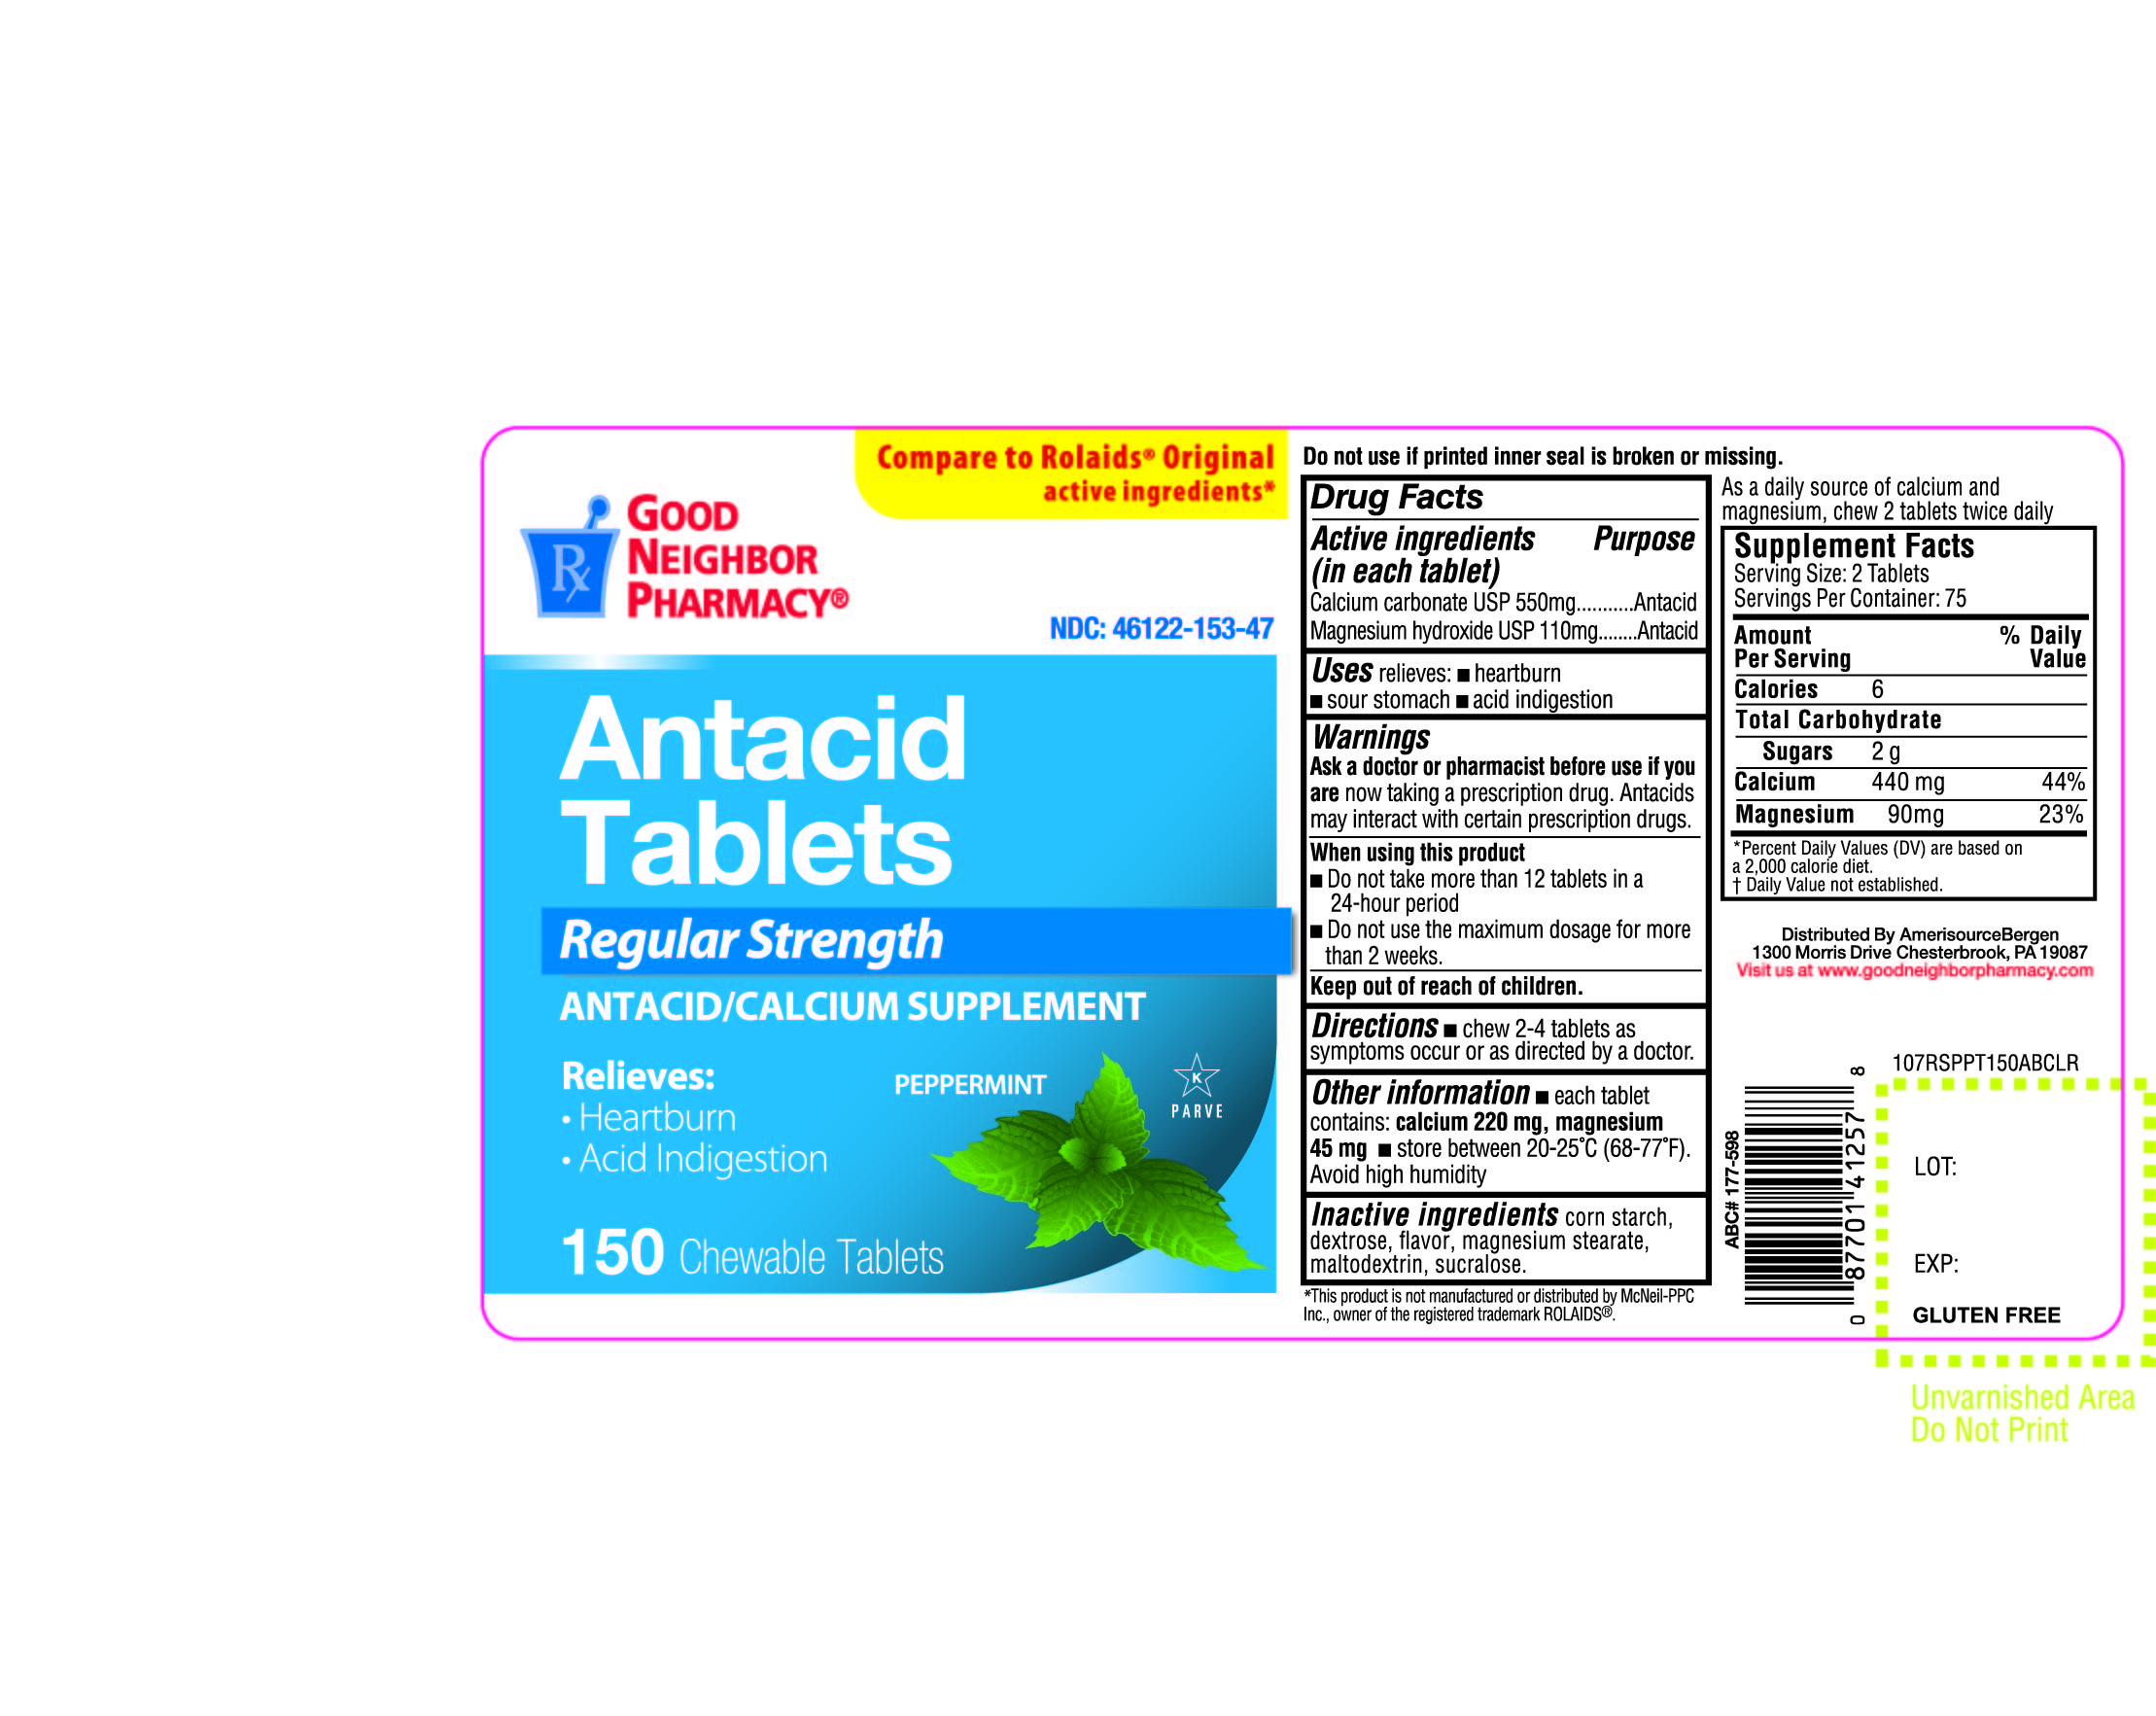 Good Neighbor Pharmacy Antacid Tablets Regular Strength Chewable Tablets